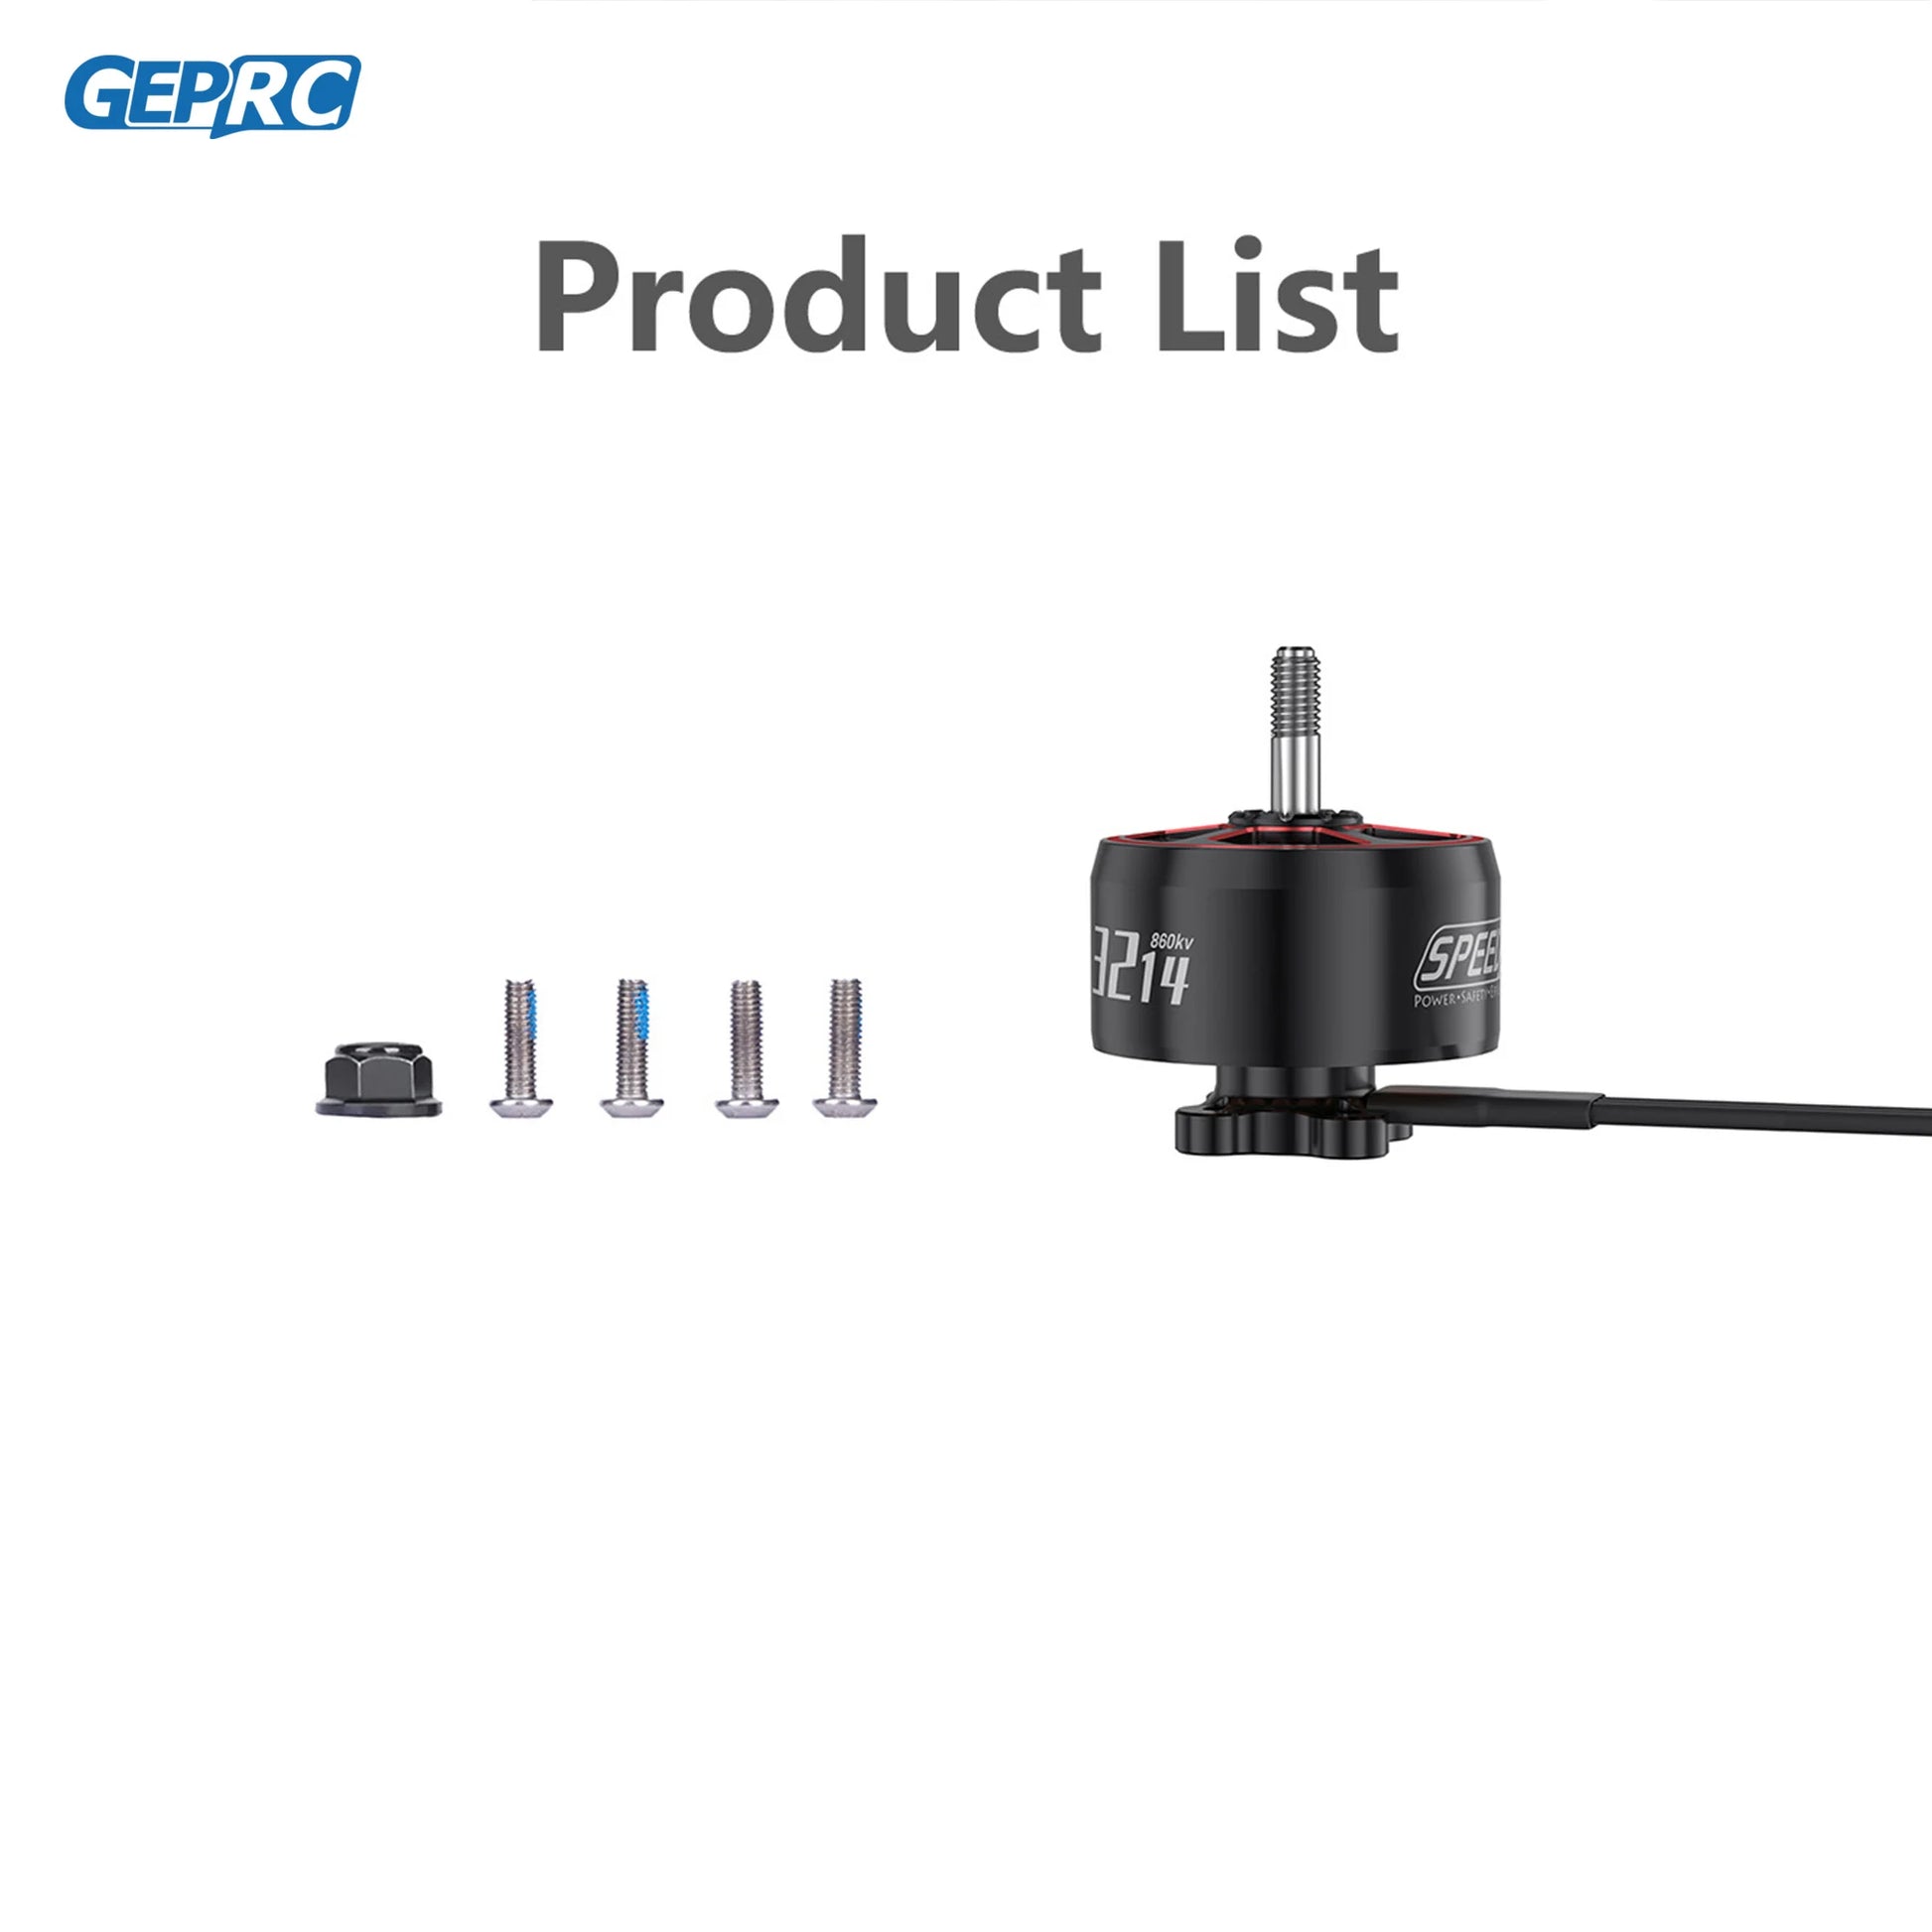 GEPRC Product List 860kv I2iy Gpll Llll